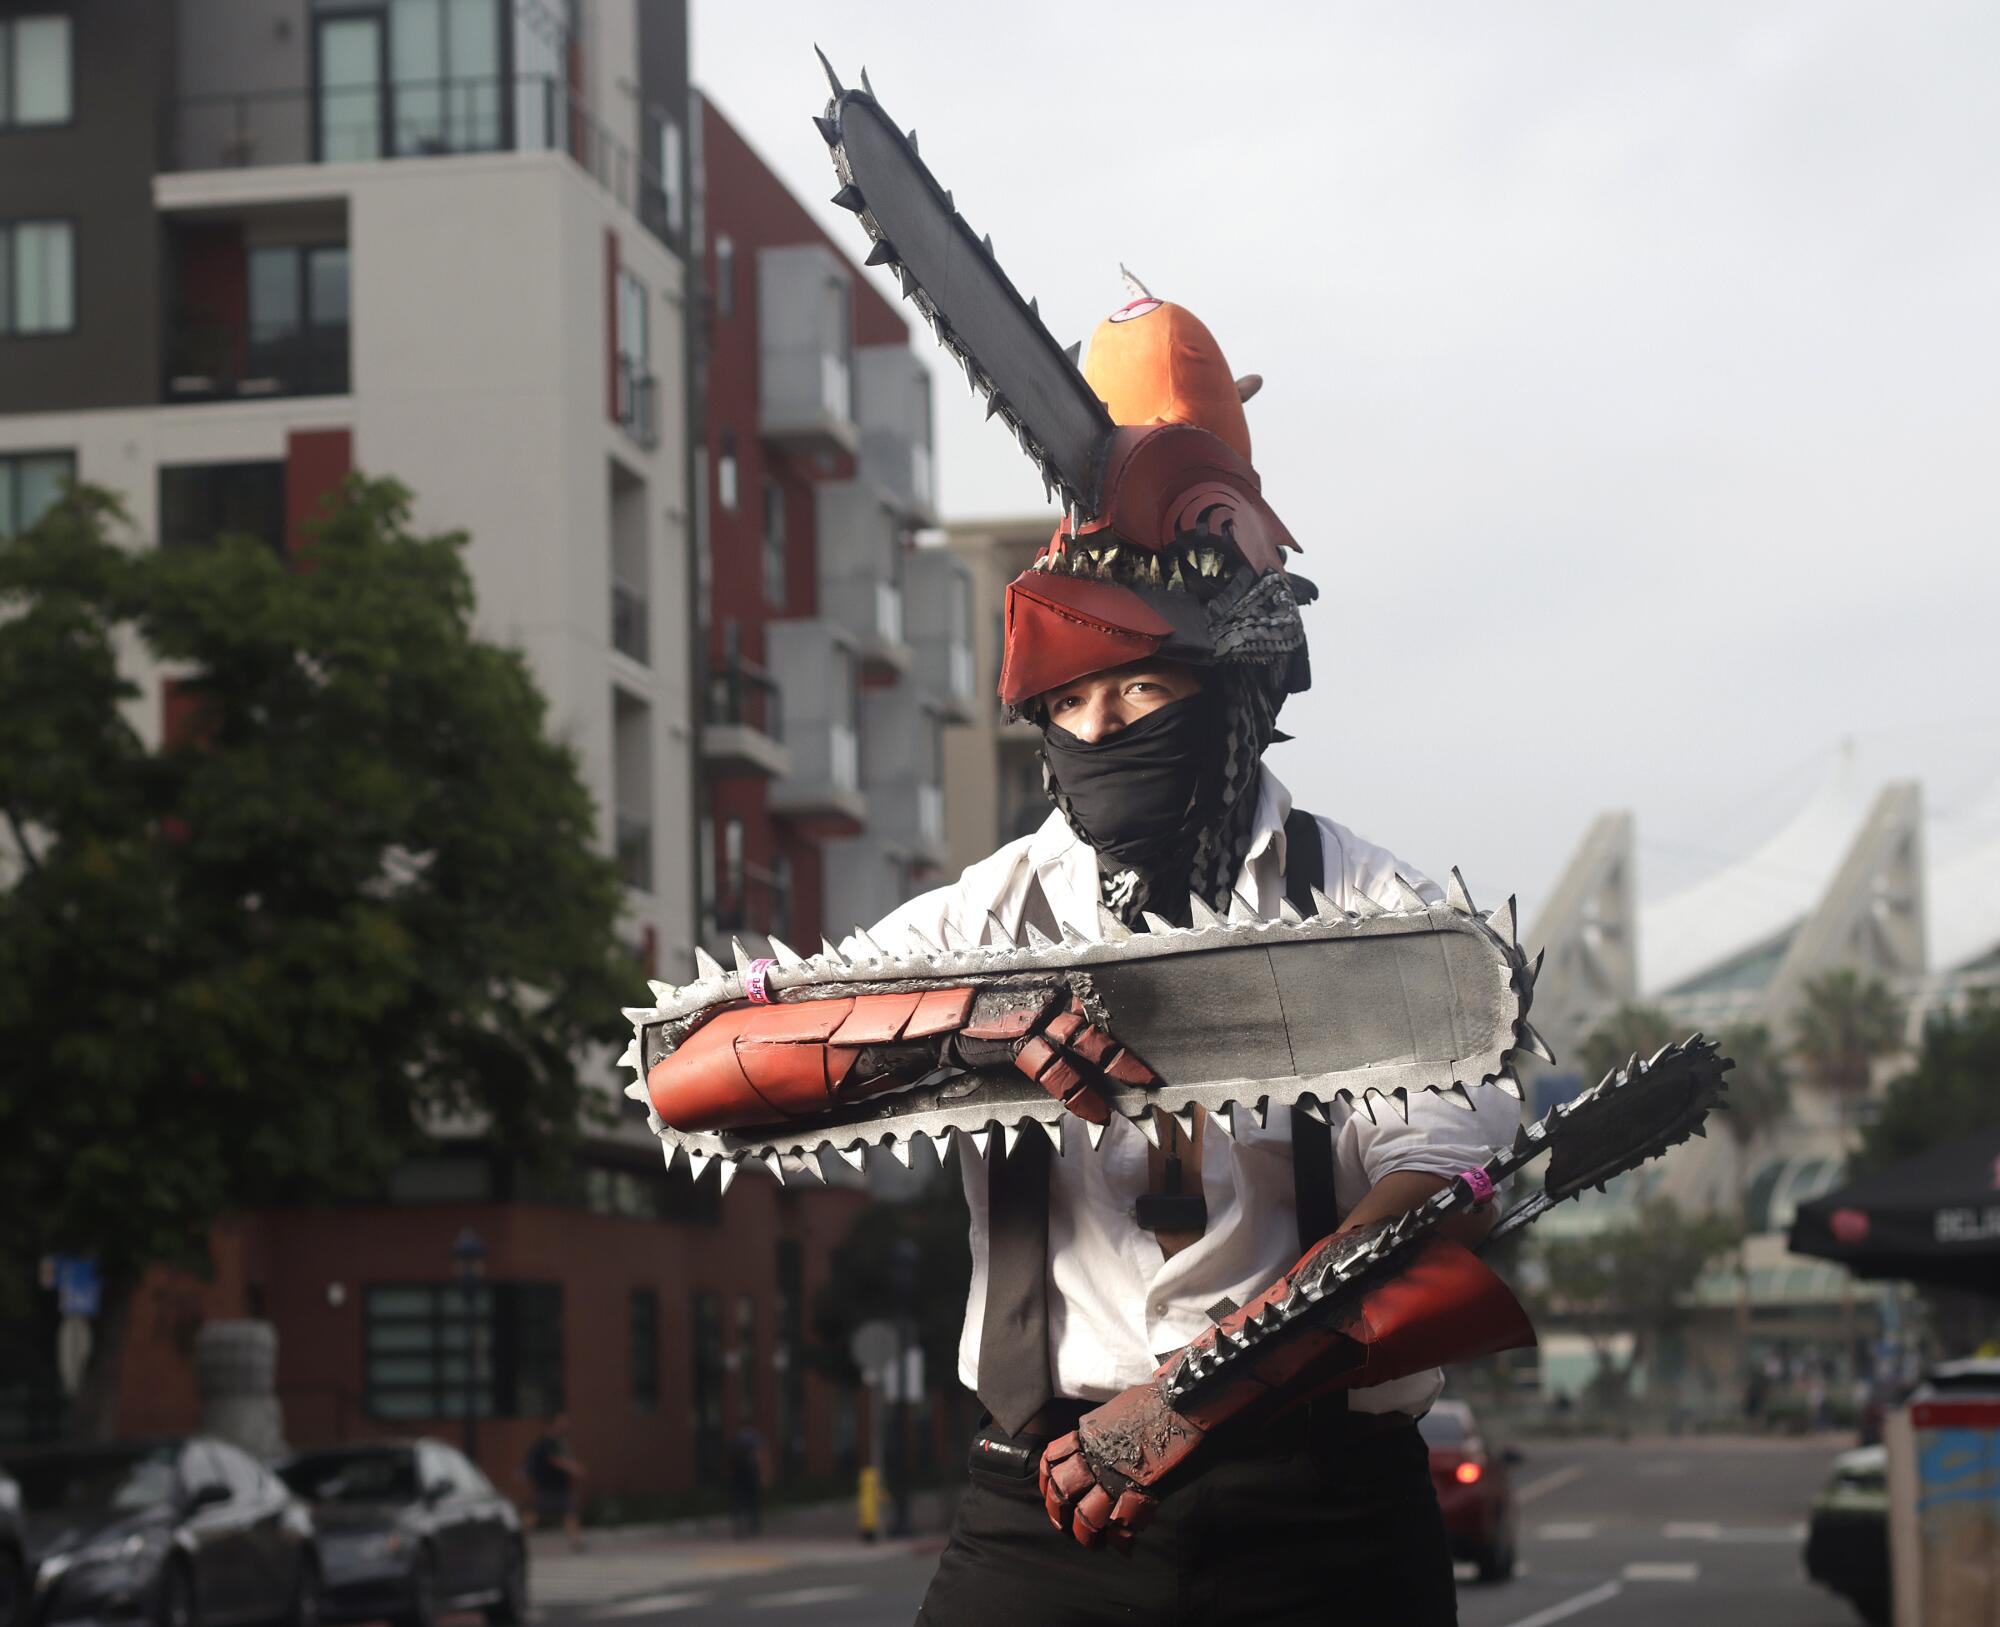 Denji Chainsaw Man Cosplay, Chainsaw Man Character Mask Cosplay